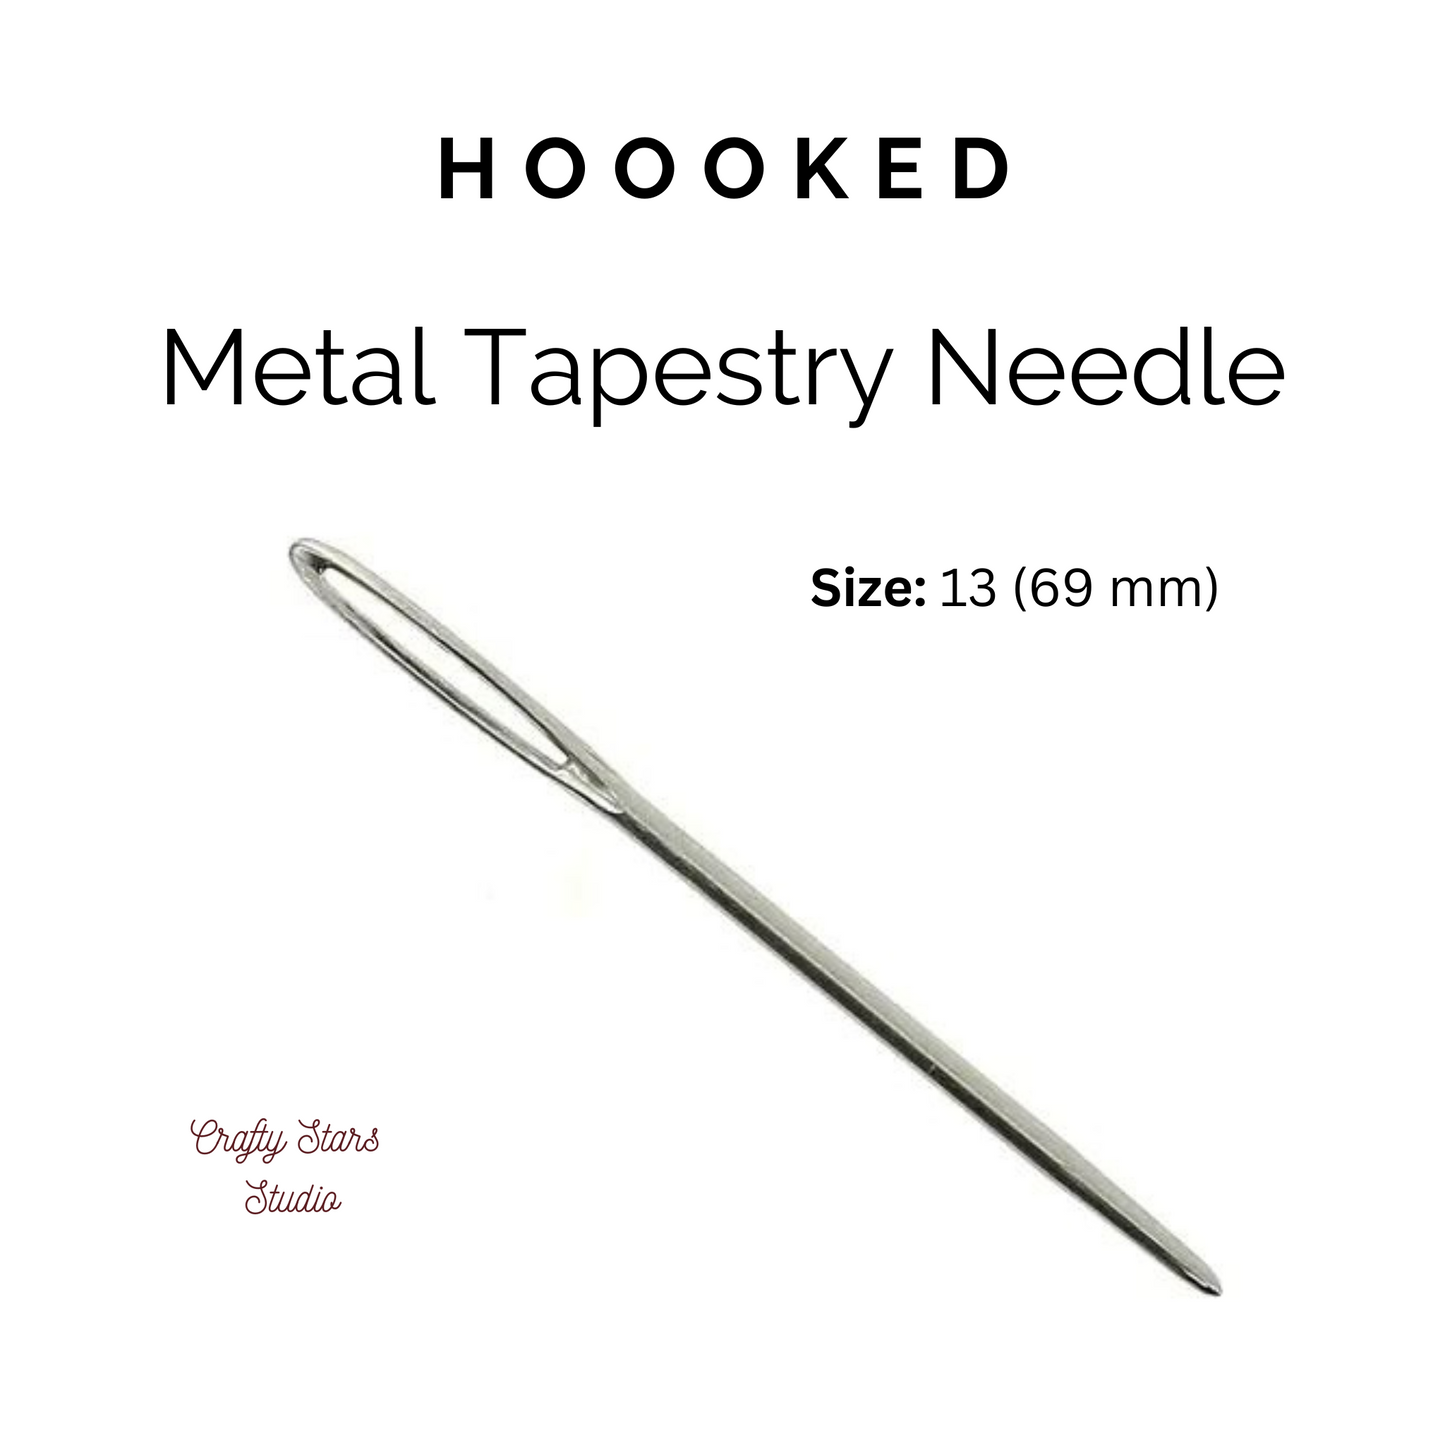 Metal Tapestry Needle